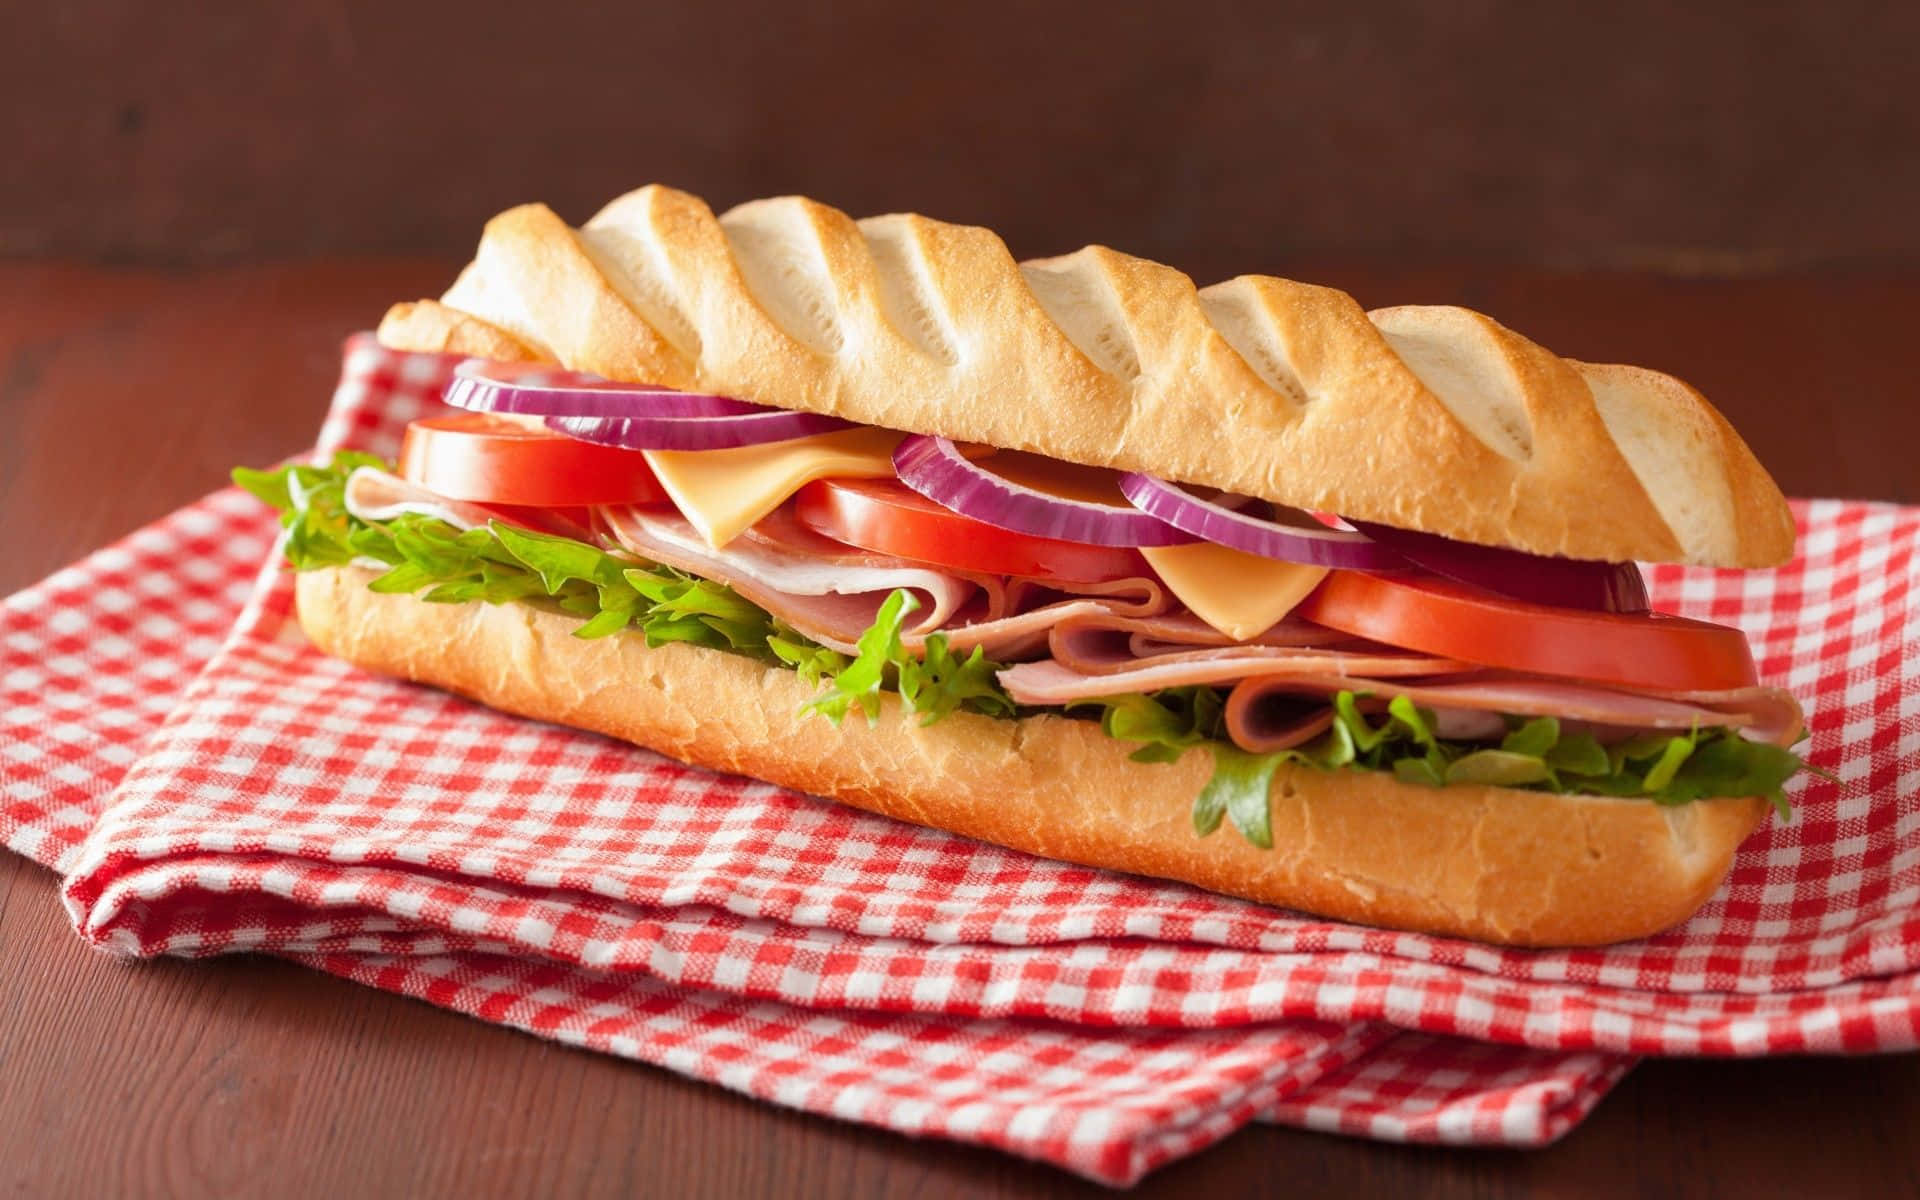 Delicious Club Sandwich on Wooden Board